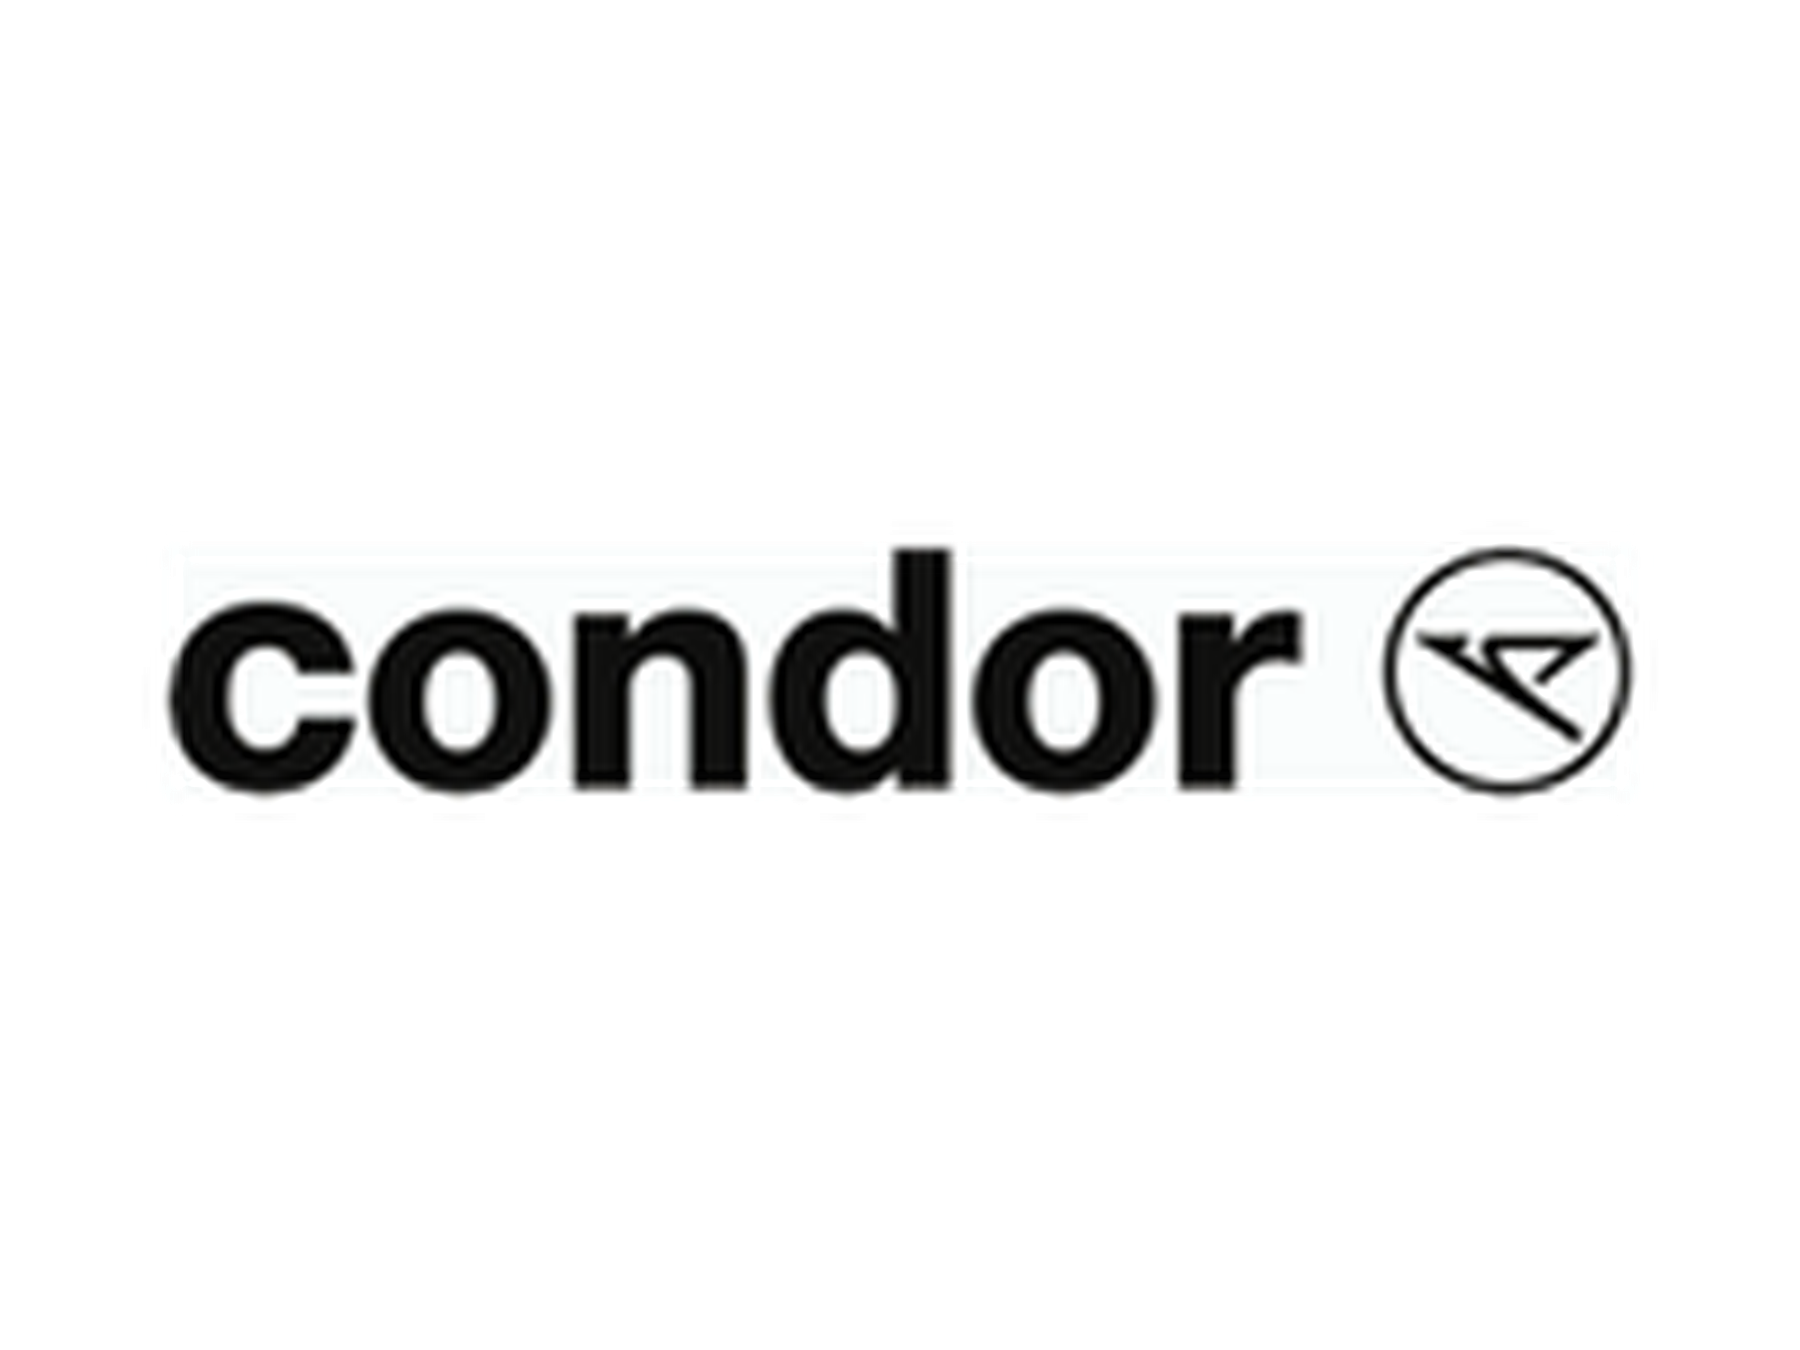 condor Rabattcode